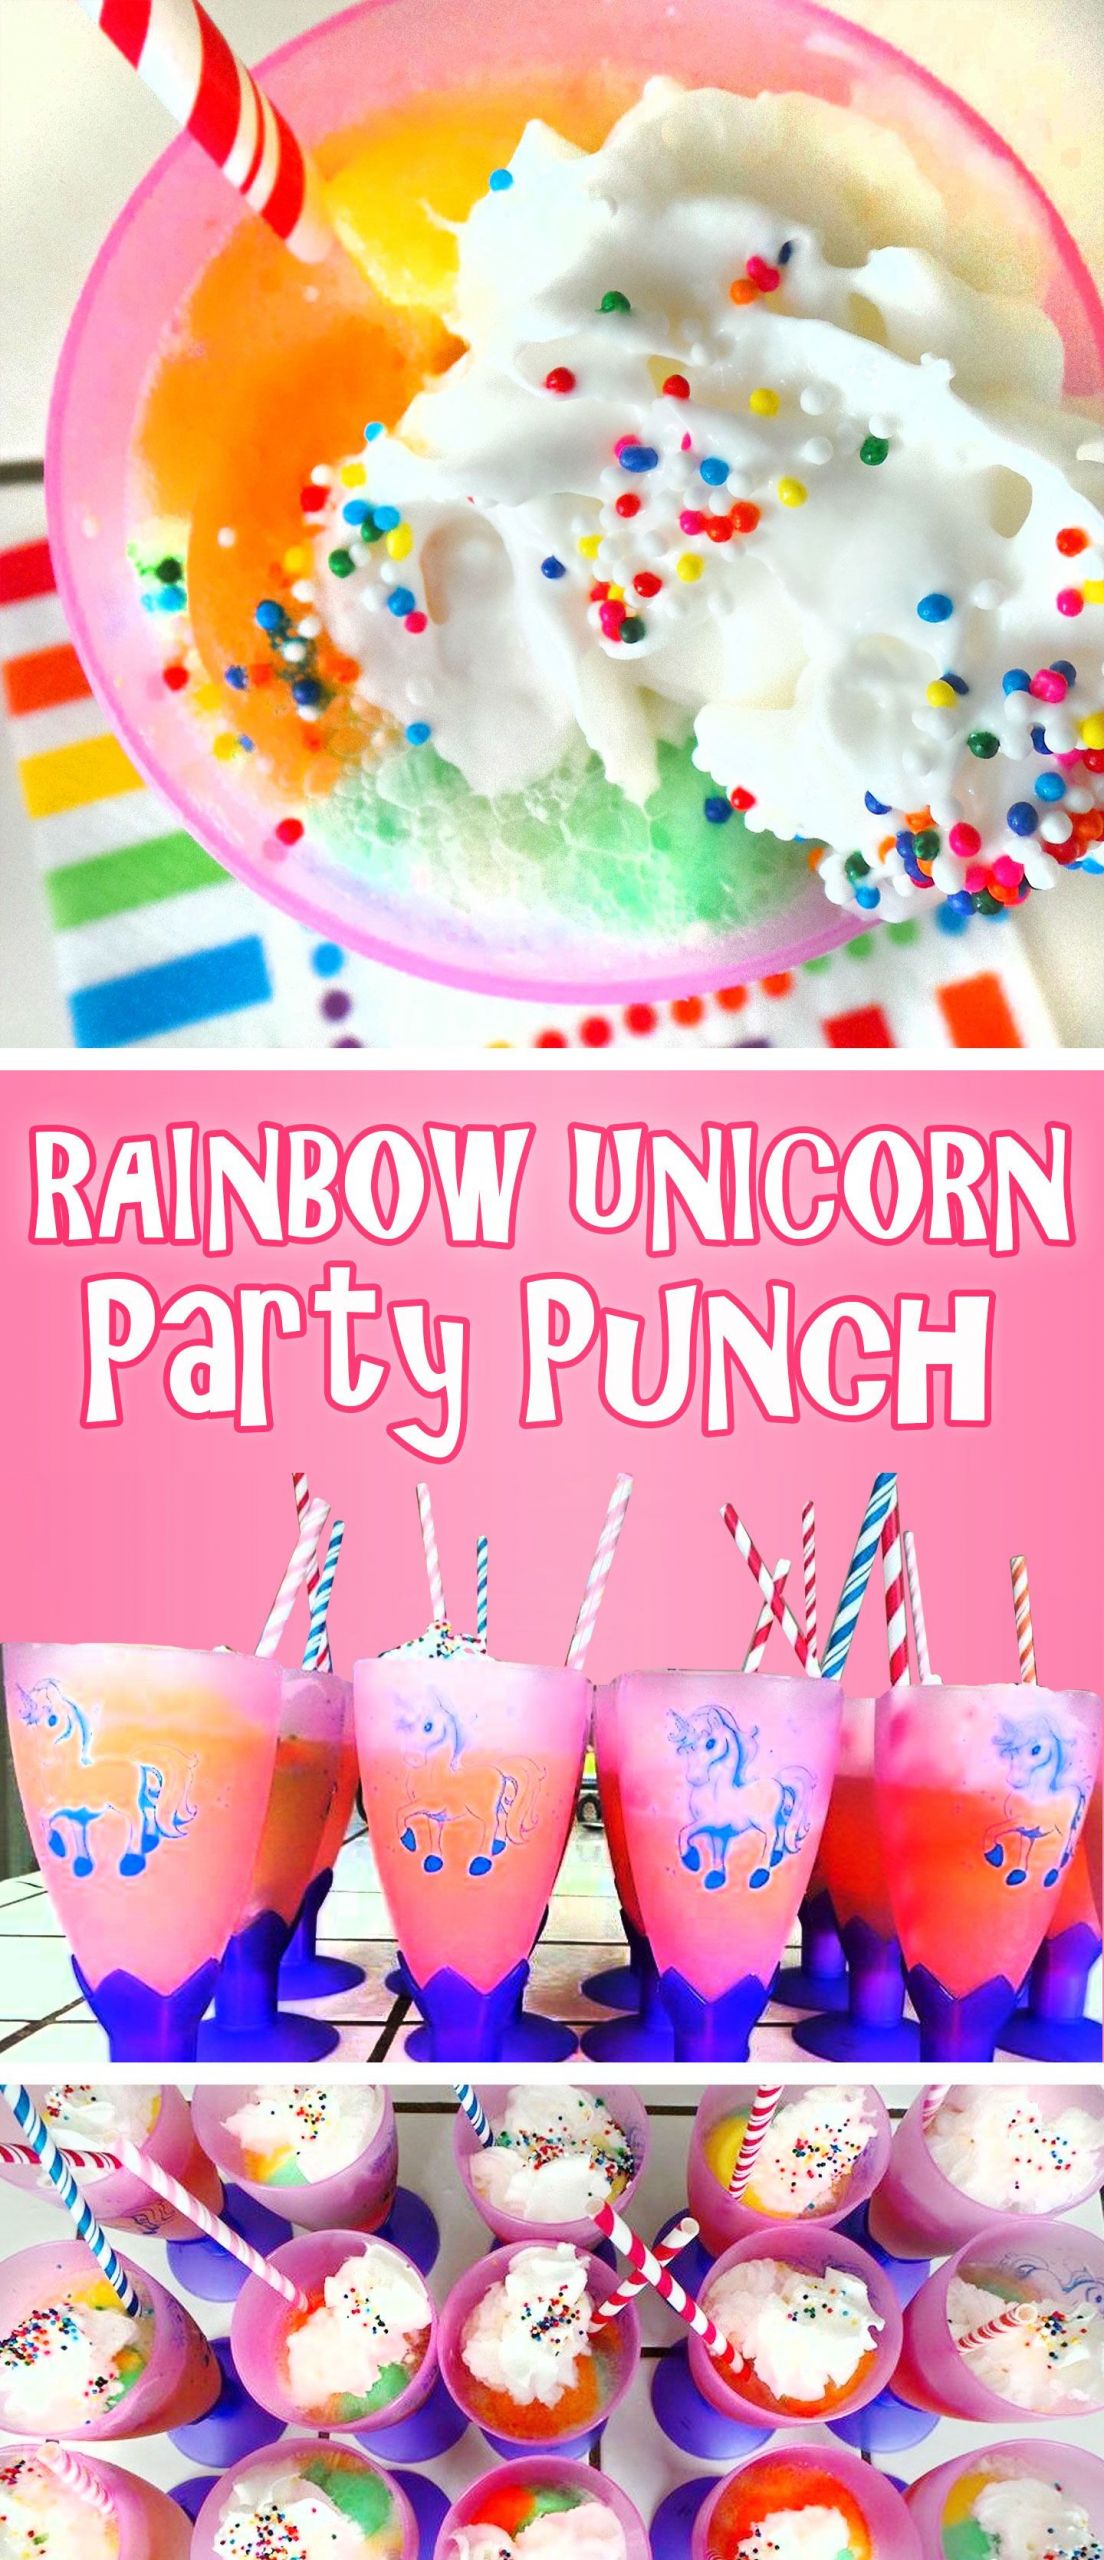 Unicorn Food Ideas For Party
 Rainbow Unicorn Party Punch Recipe